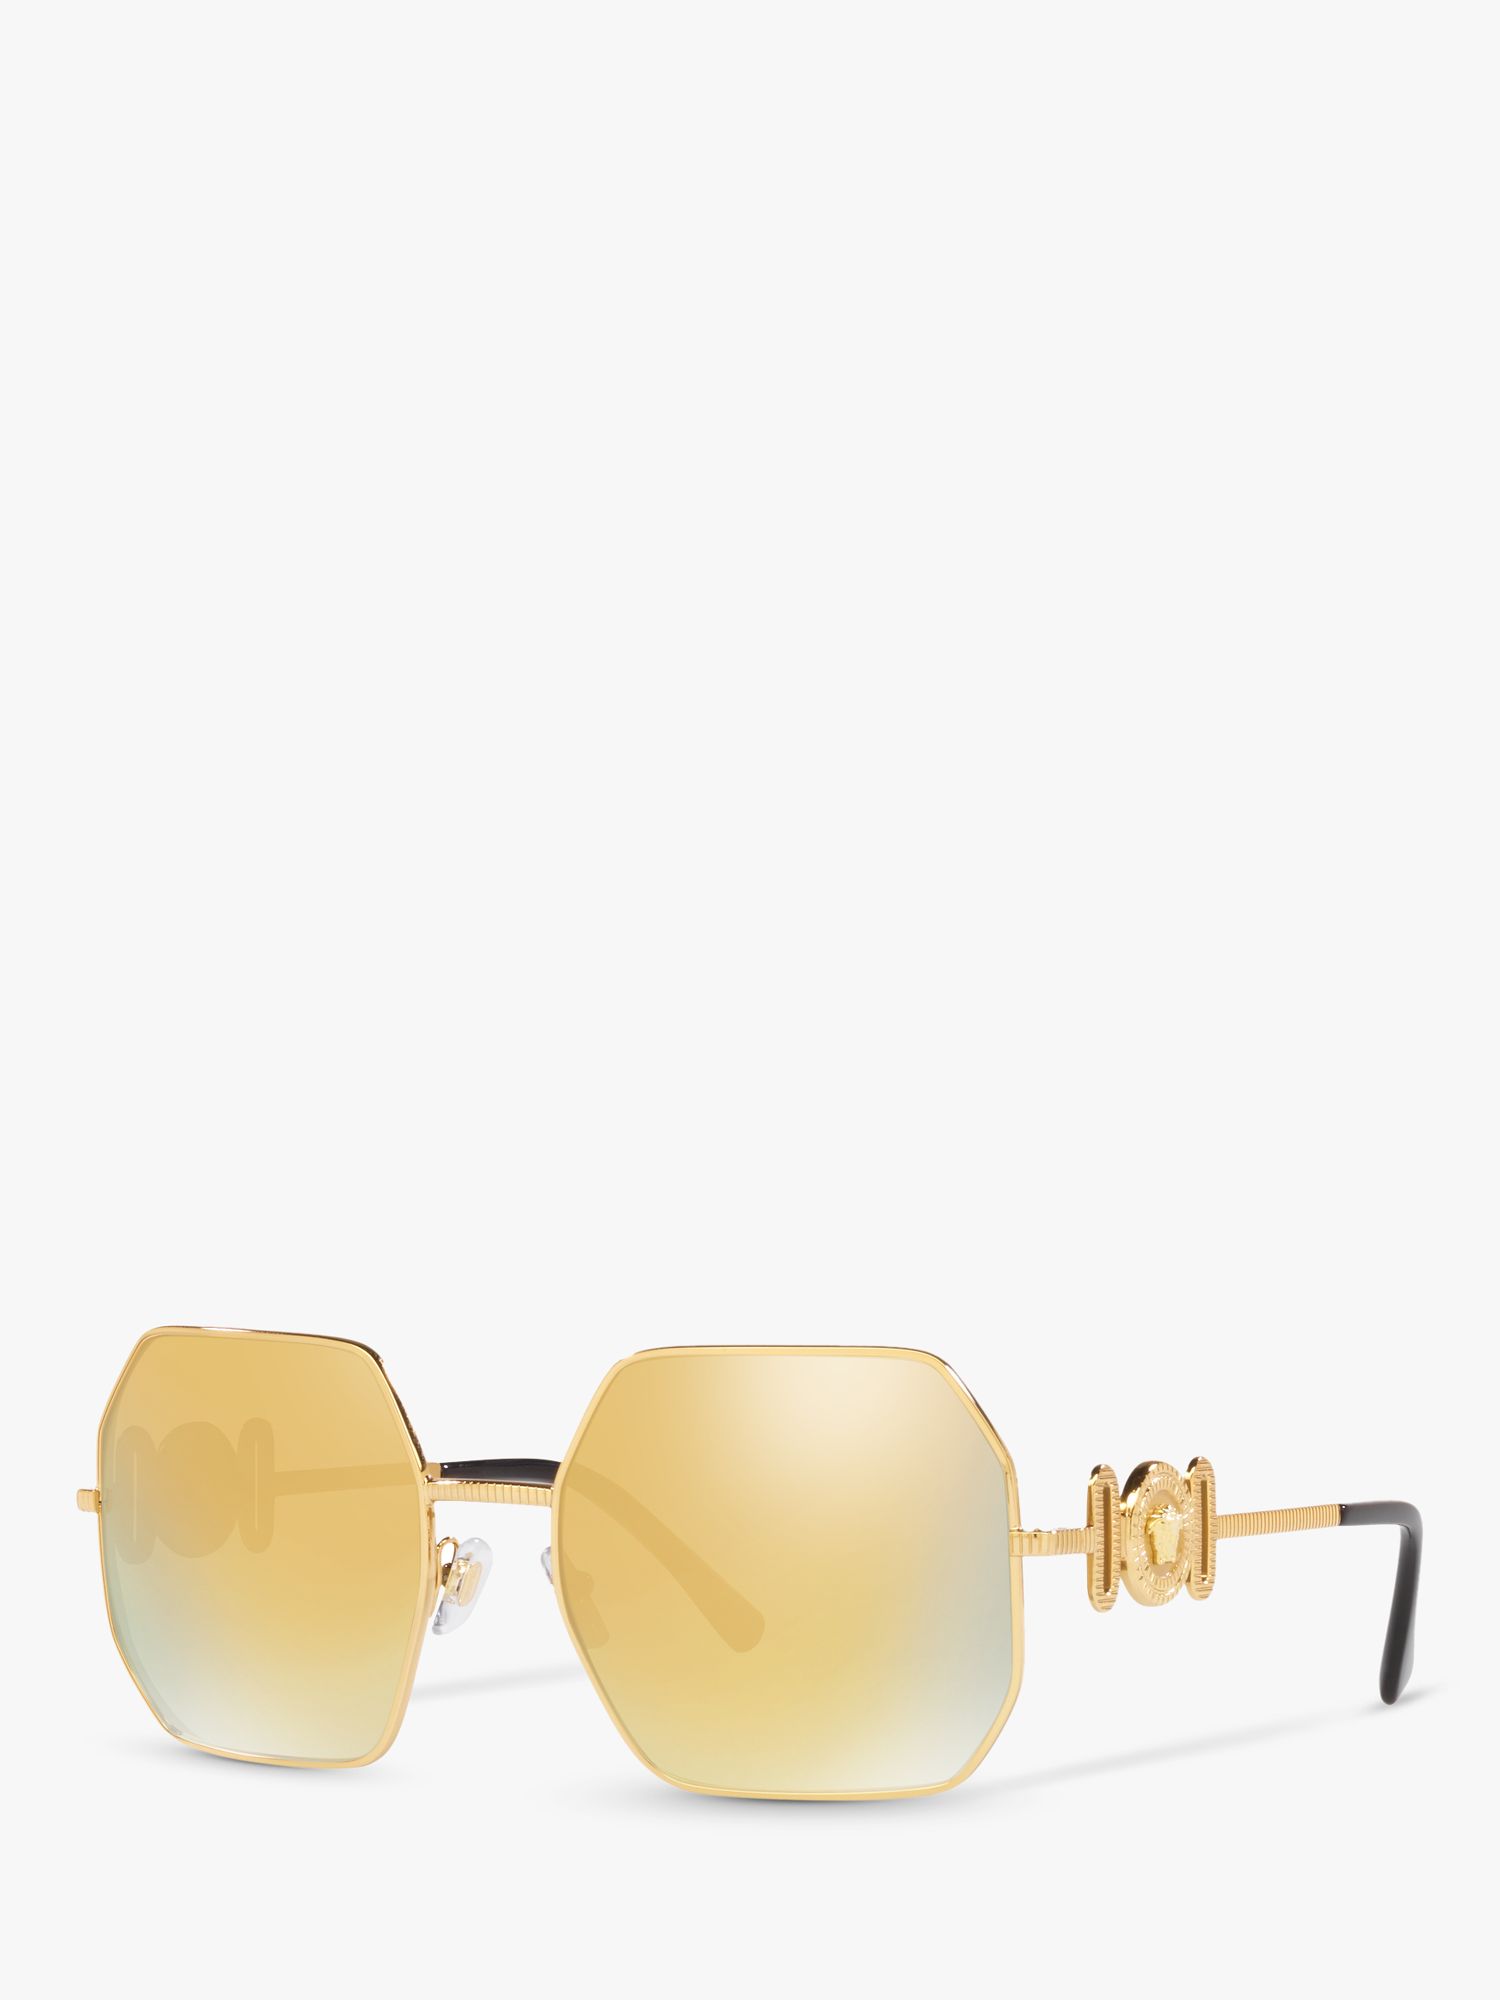 Versace VE2248 Women's Irregular Sunglasses, Gold/Mirror Yellow at John ...